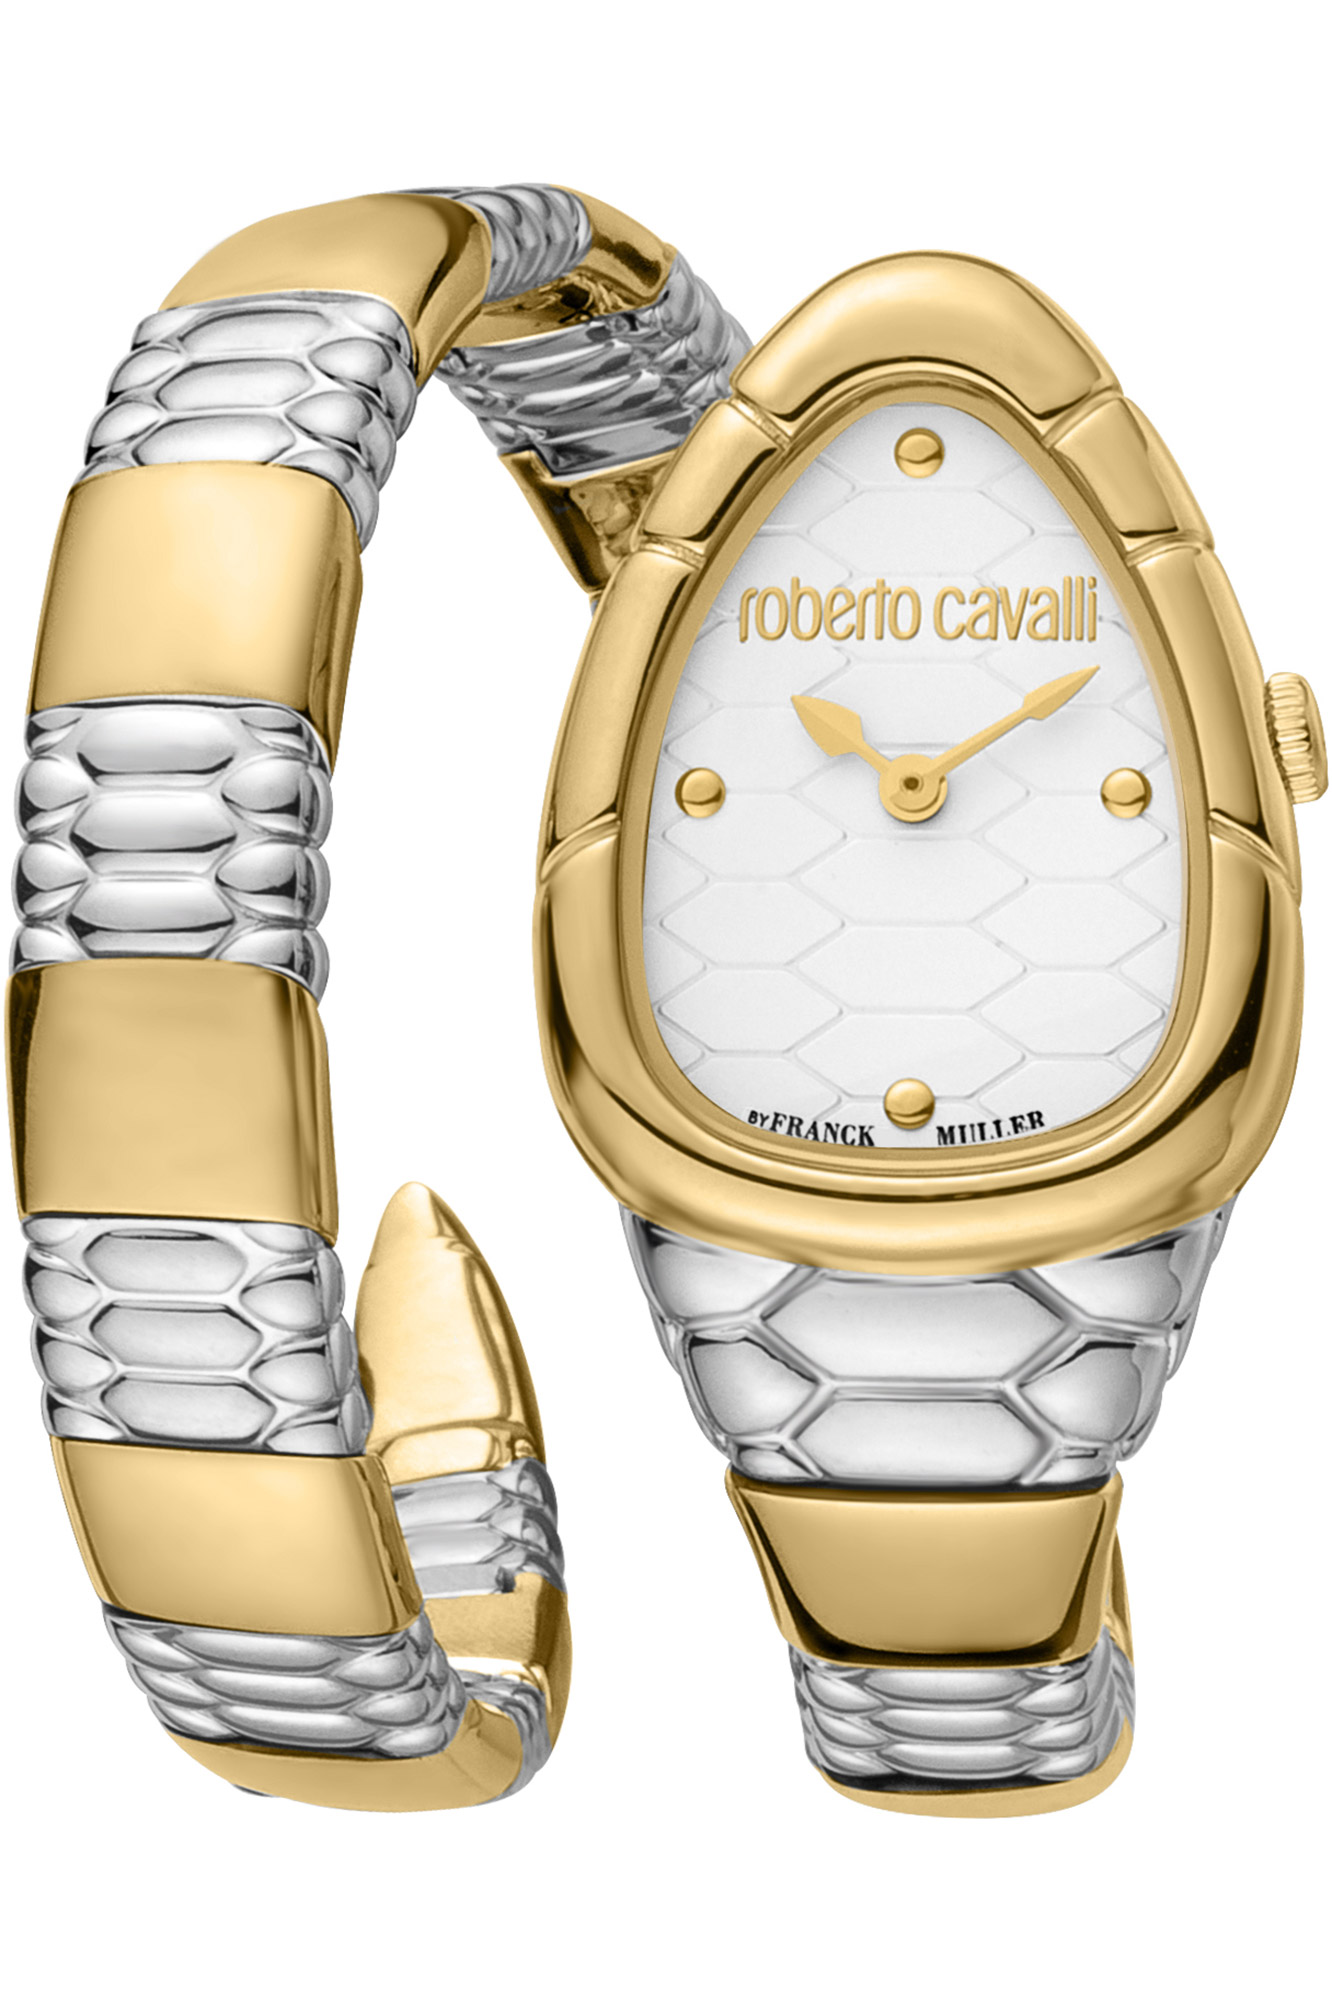 Watch Roberto Cavalli by Franck Muller rv1l184m0061